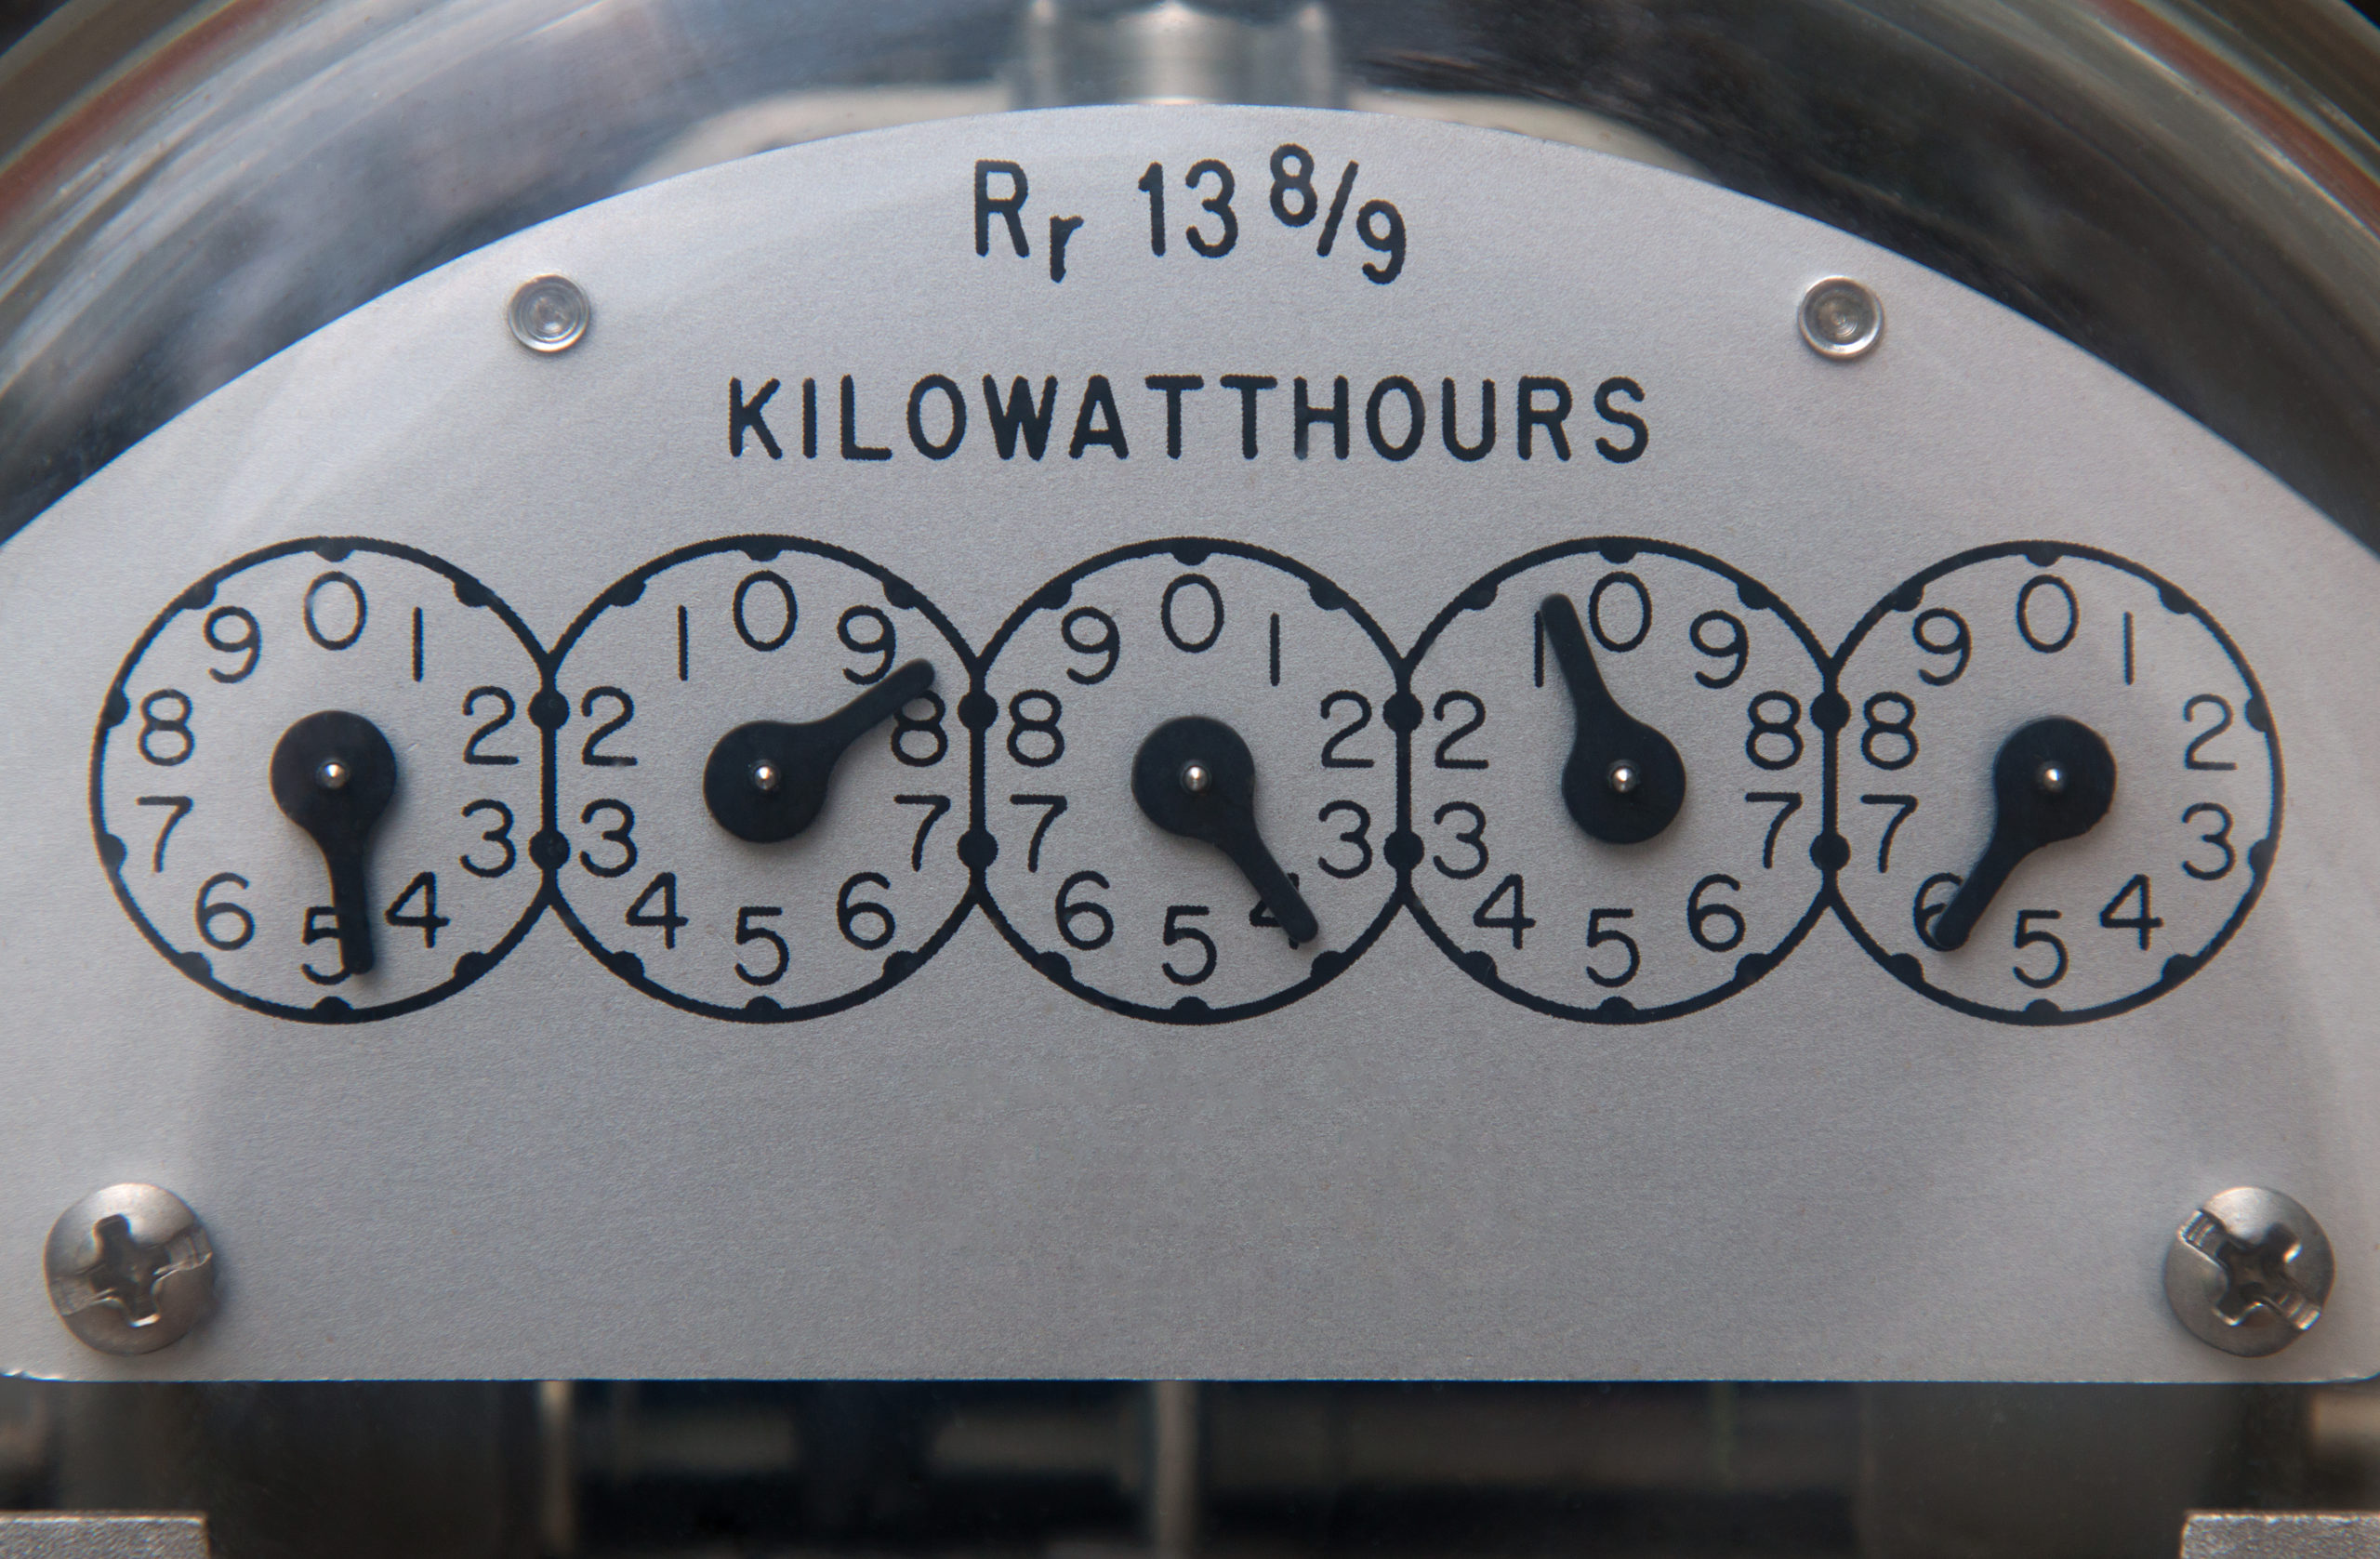 Kilowatt-hour